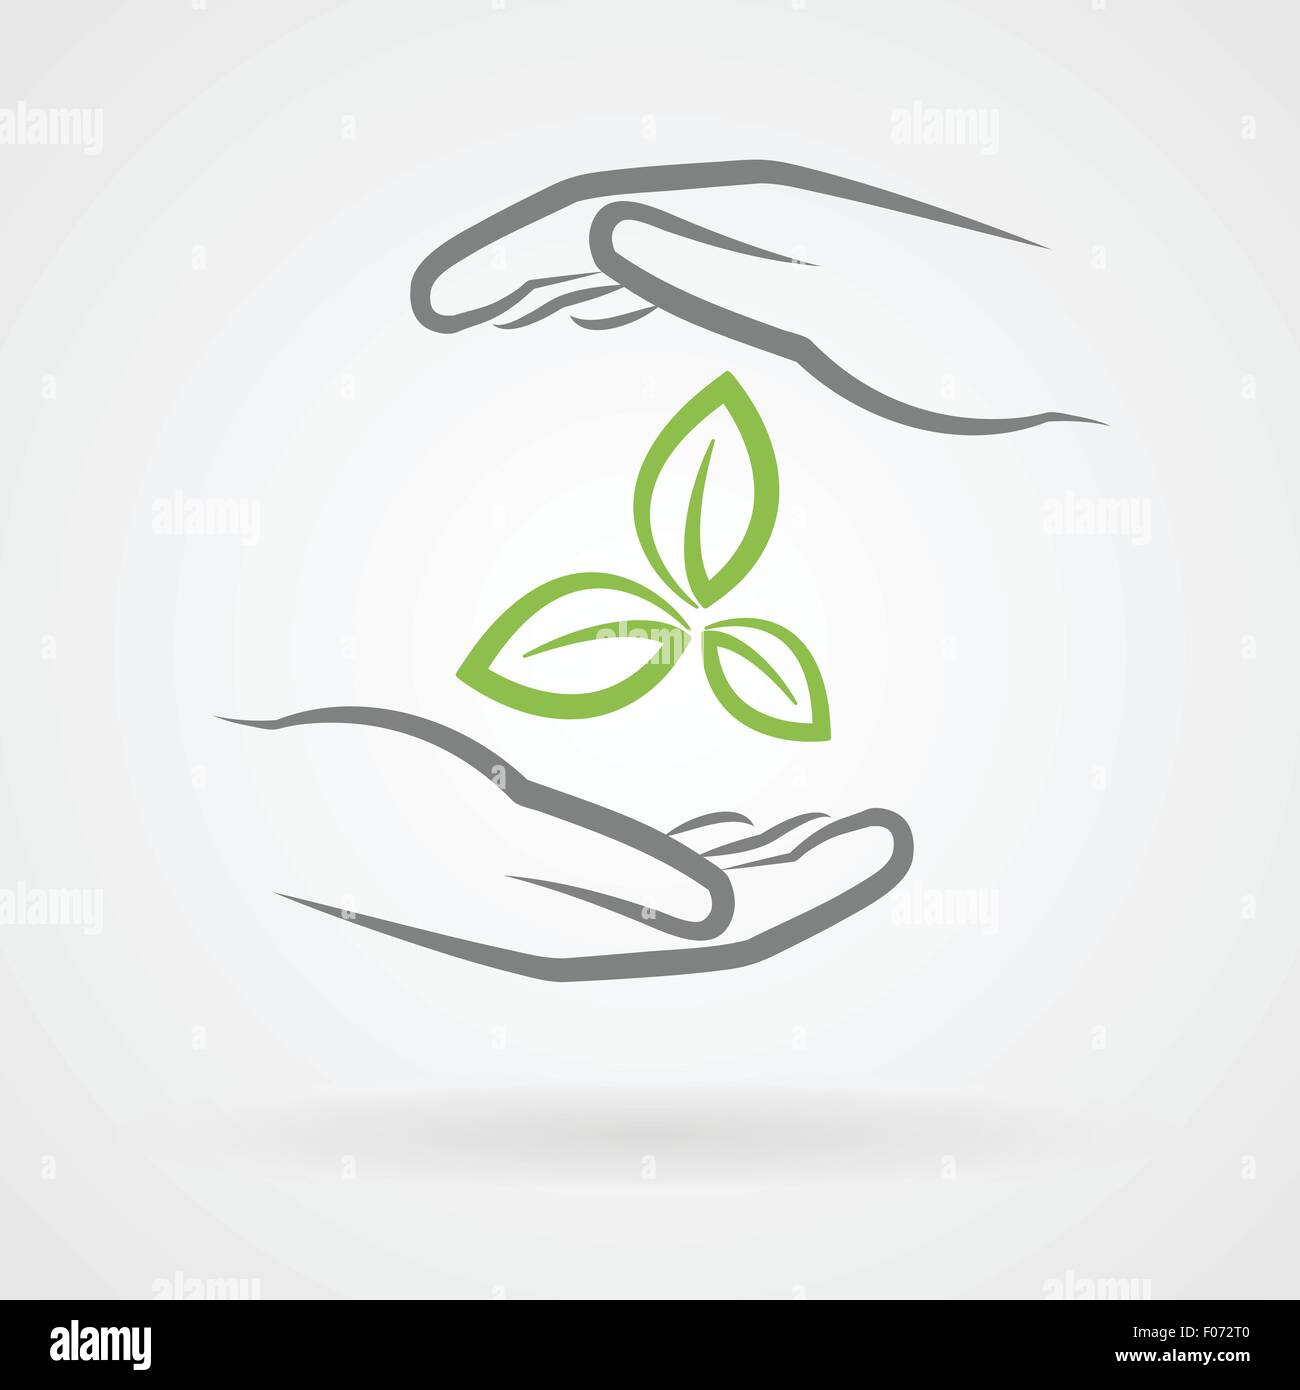 Hände mit grünen Blättern Symbol als Umweltschutz-Konzept-Vektor-Illustration. Stock Vektor